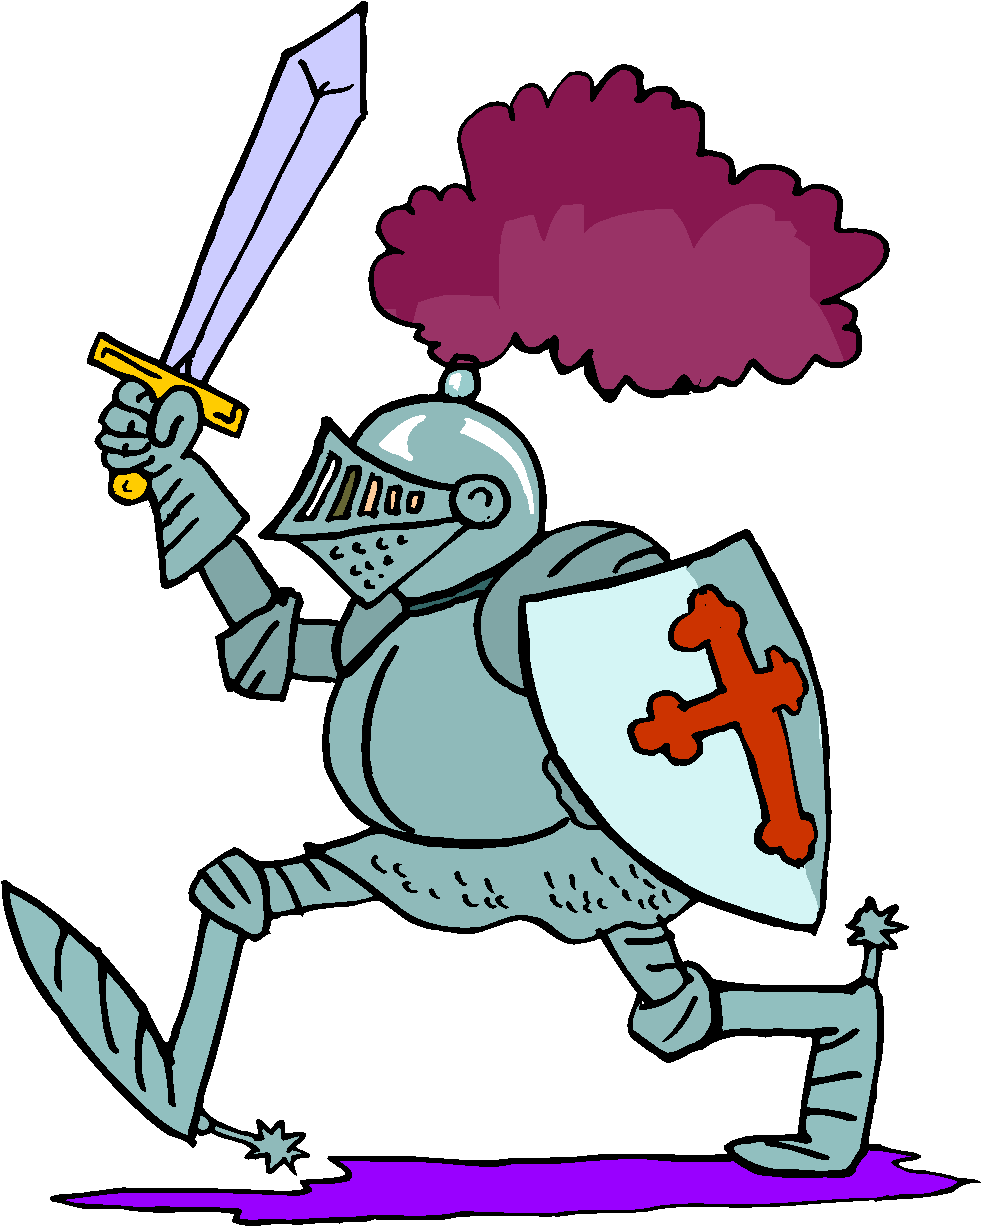 Clipart knight in shining armor